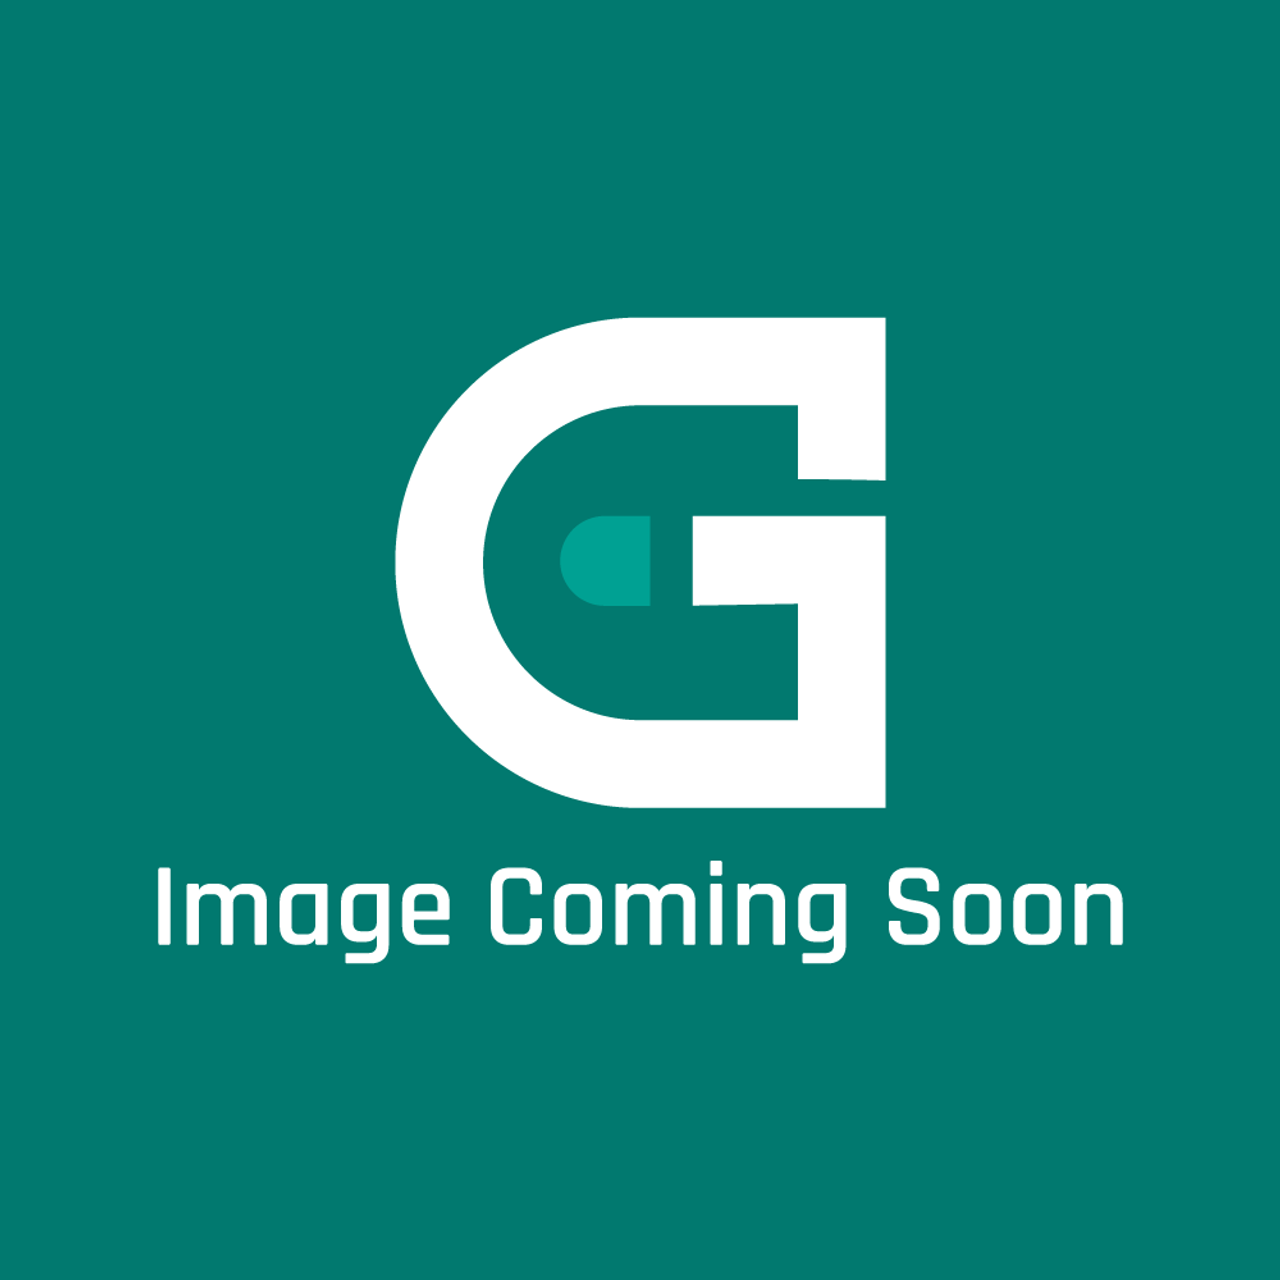 GE Appliances WD01X10425 - Dishwasher Bracket - Image Coming Soon!